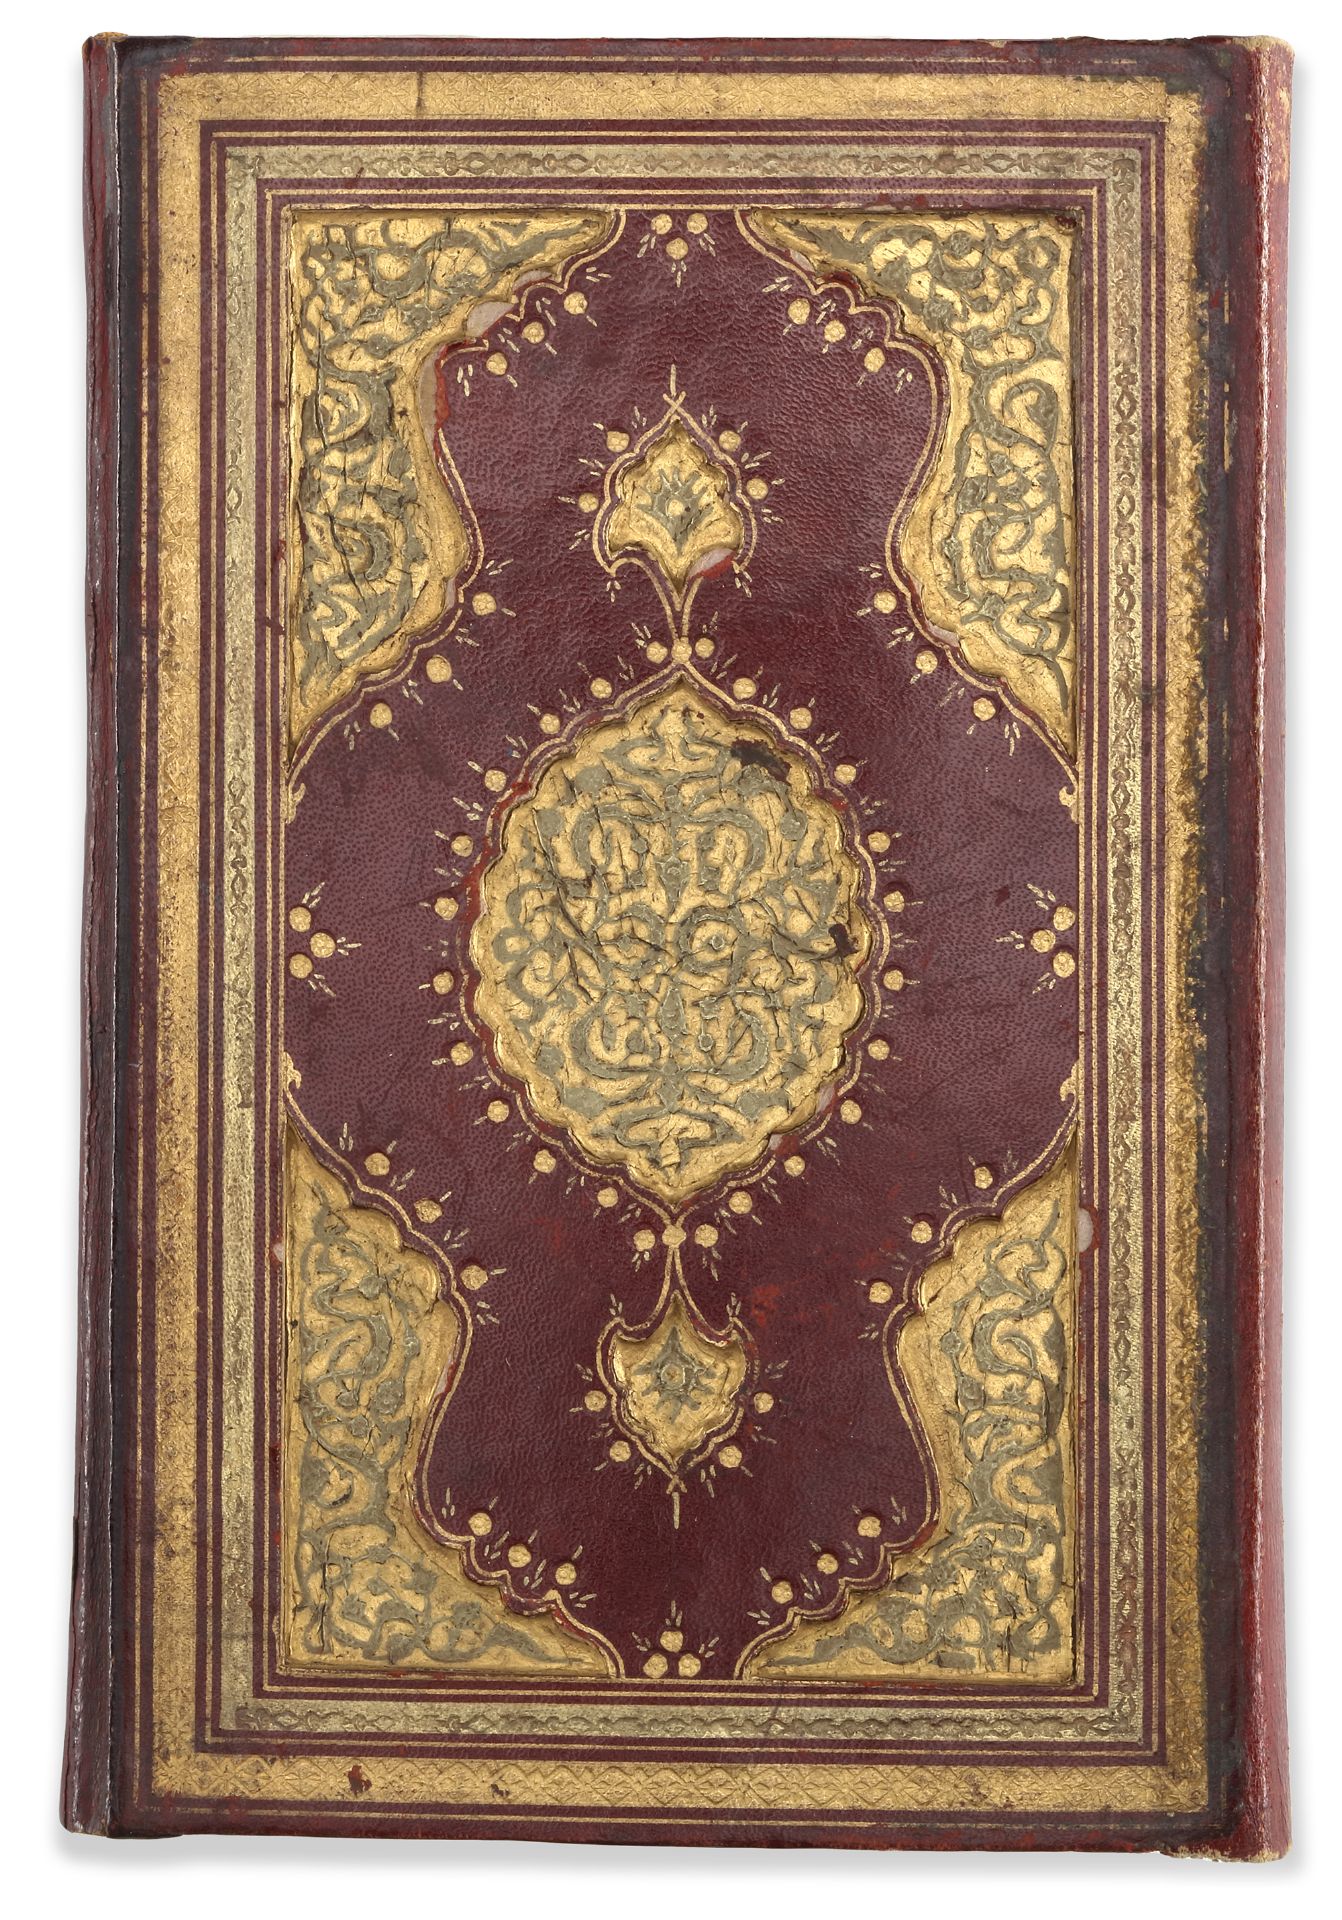 DALA'IL AL-KHAYRAT BY MUHAMMAD BIN SULAYMAN AL-JAZULI (D. 1465 AD), SIGNED HASAN VASFI EFENDI, OTTOM - Image 5 of 5